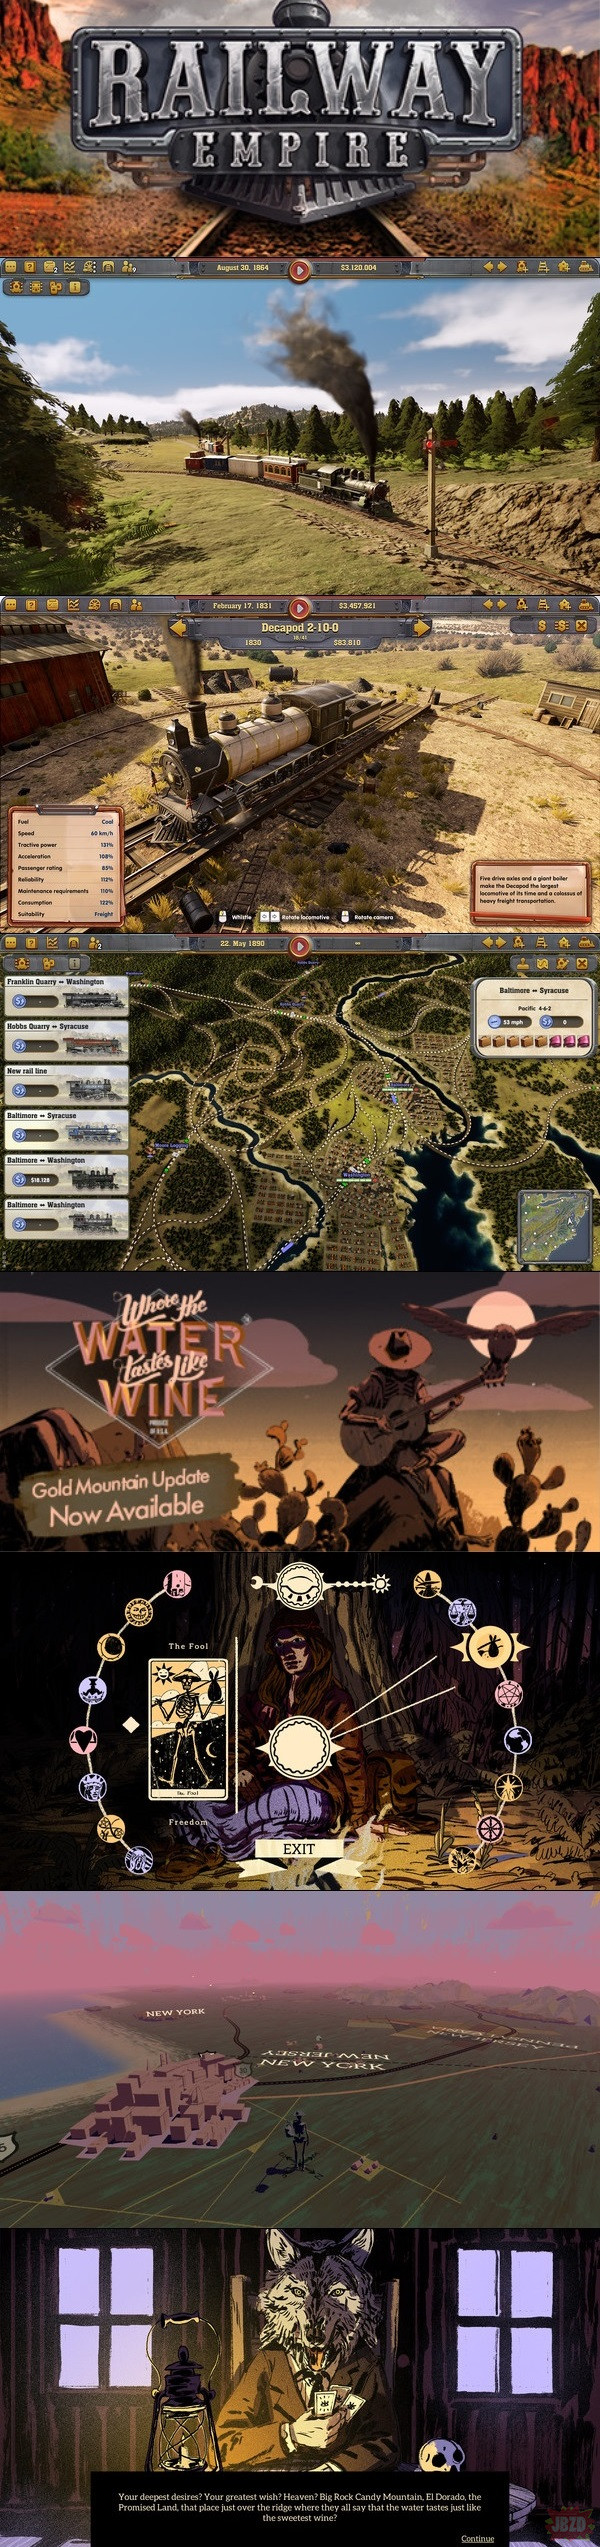 Railway Empire i Where The Water Tastes Like Wine za darmo w epic games store